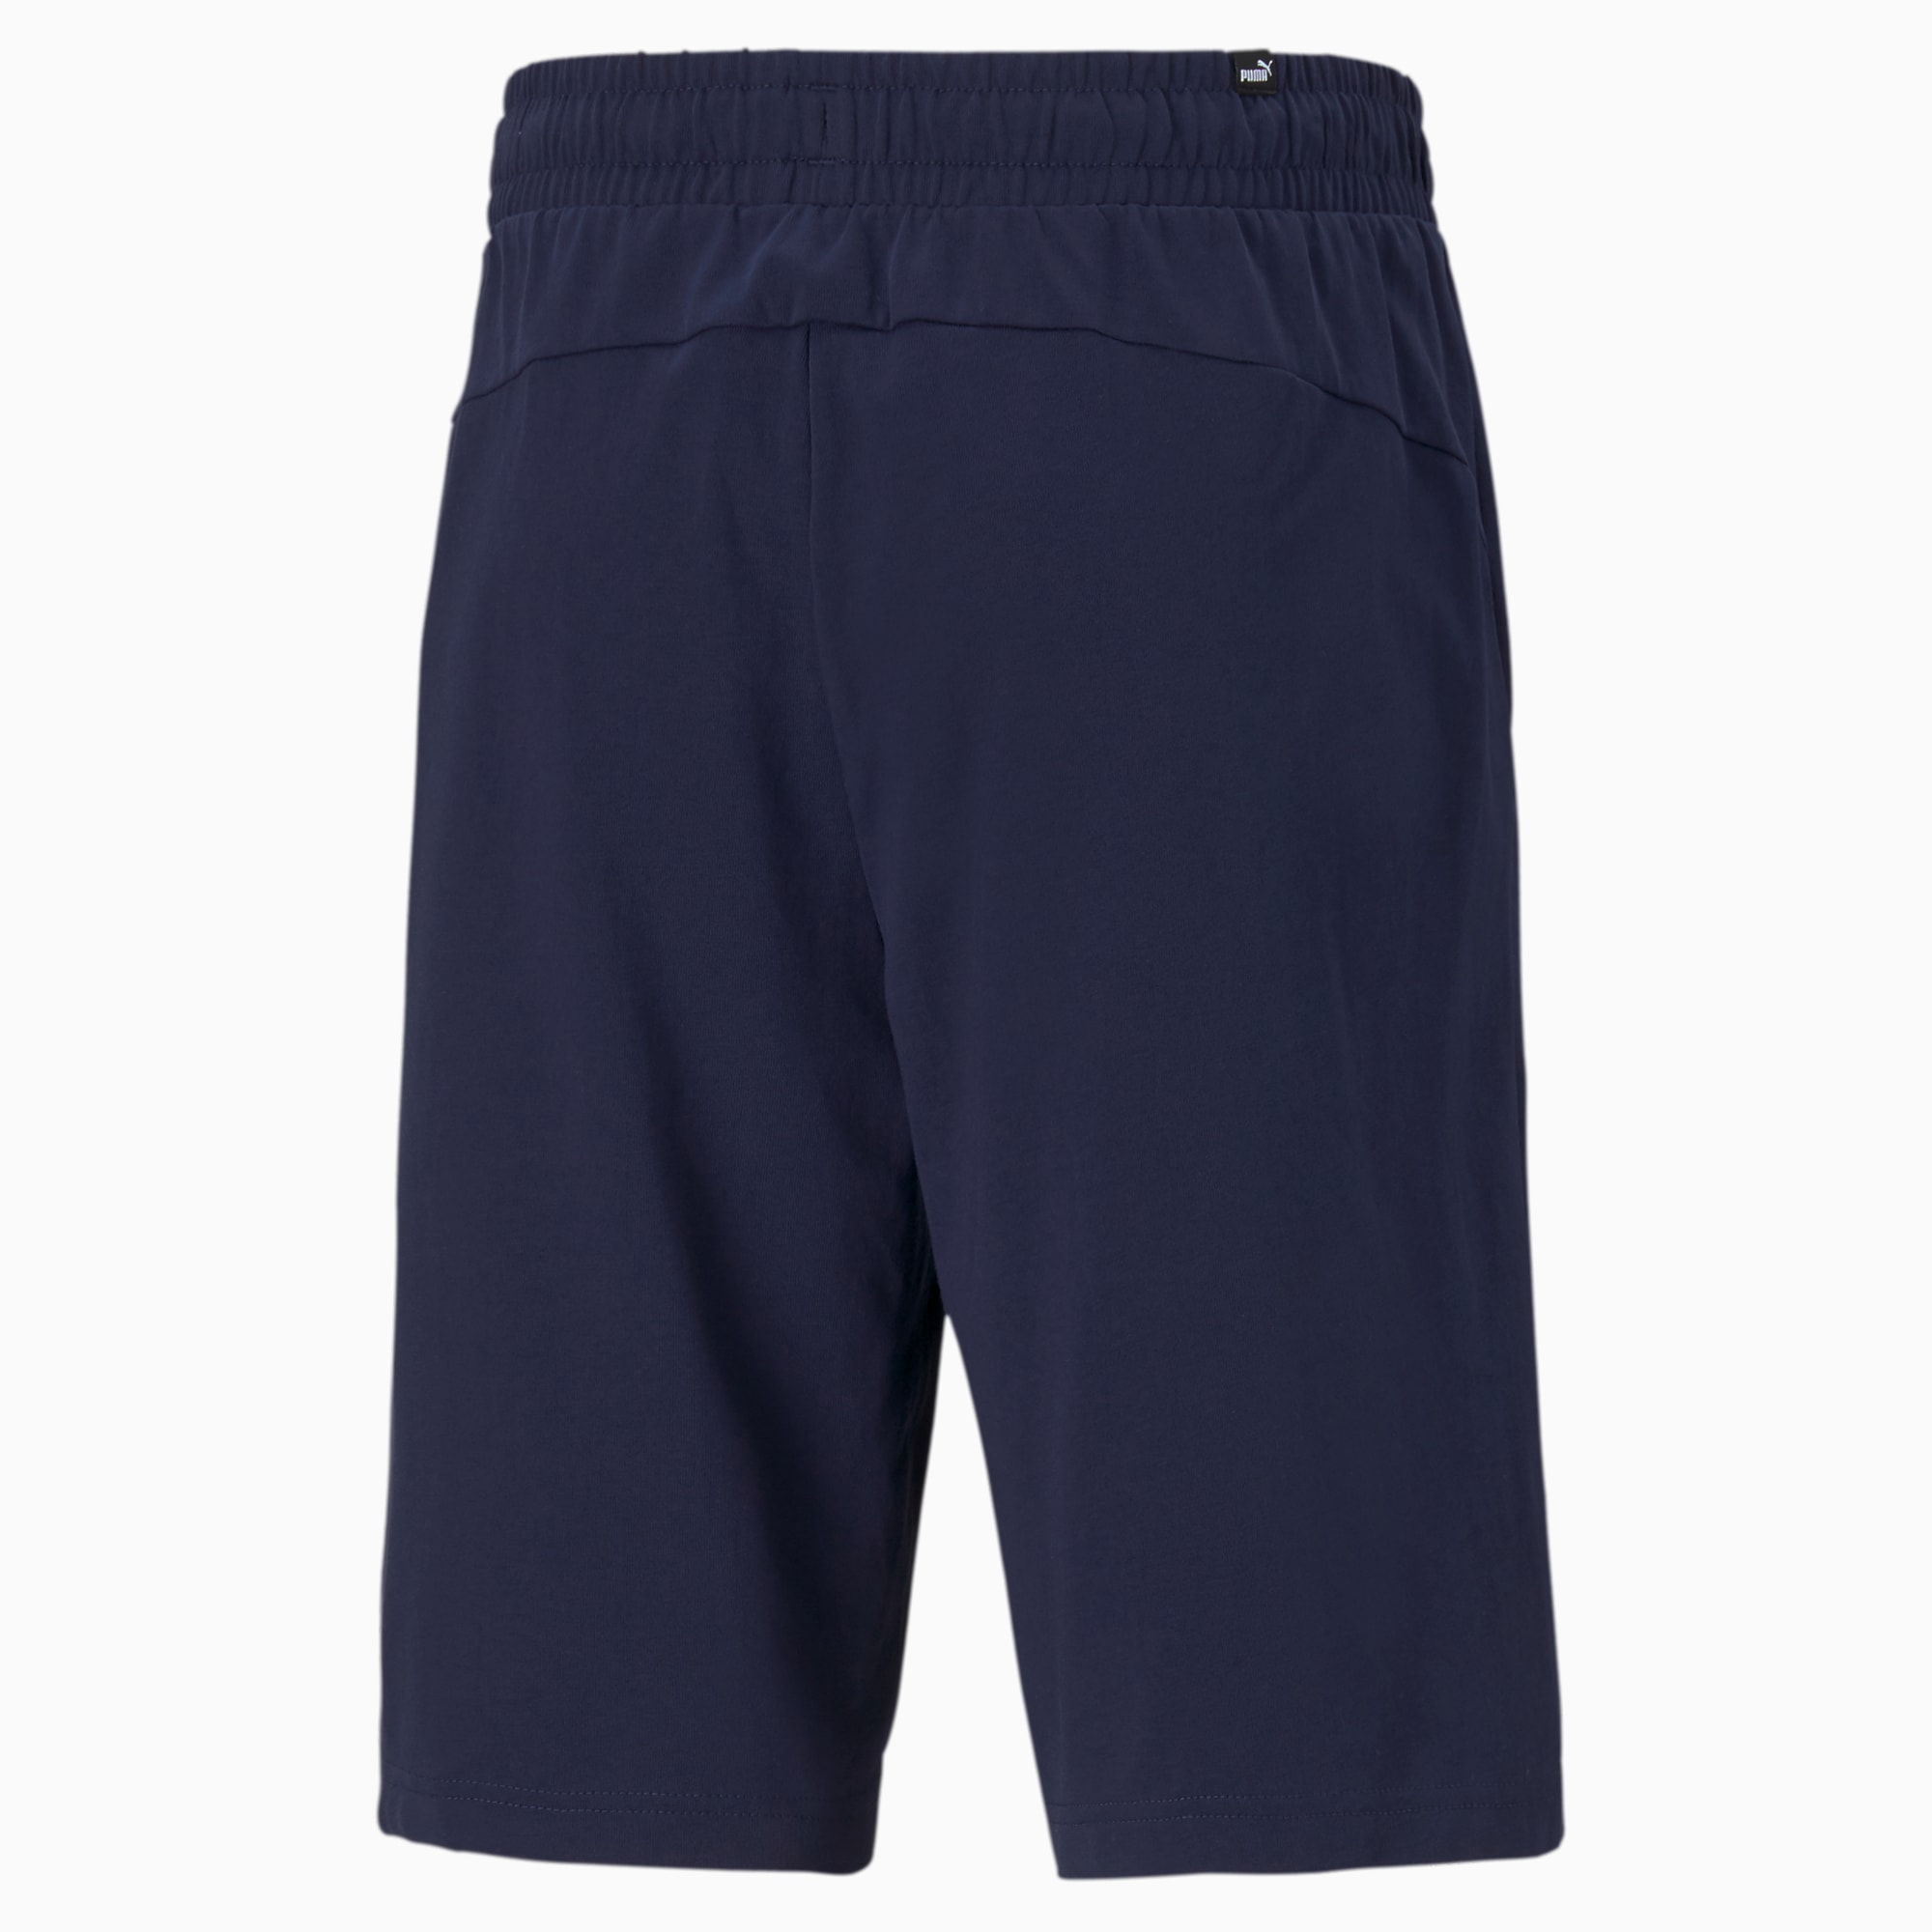 PUMA Essentials Jersey Men's Shorts, Peacoat, Size XS, Clothing